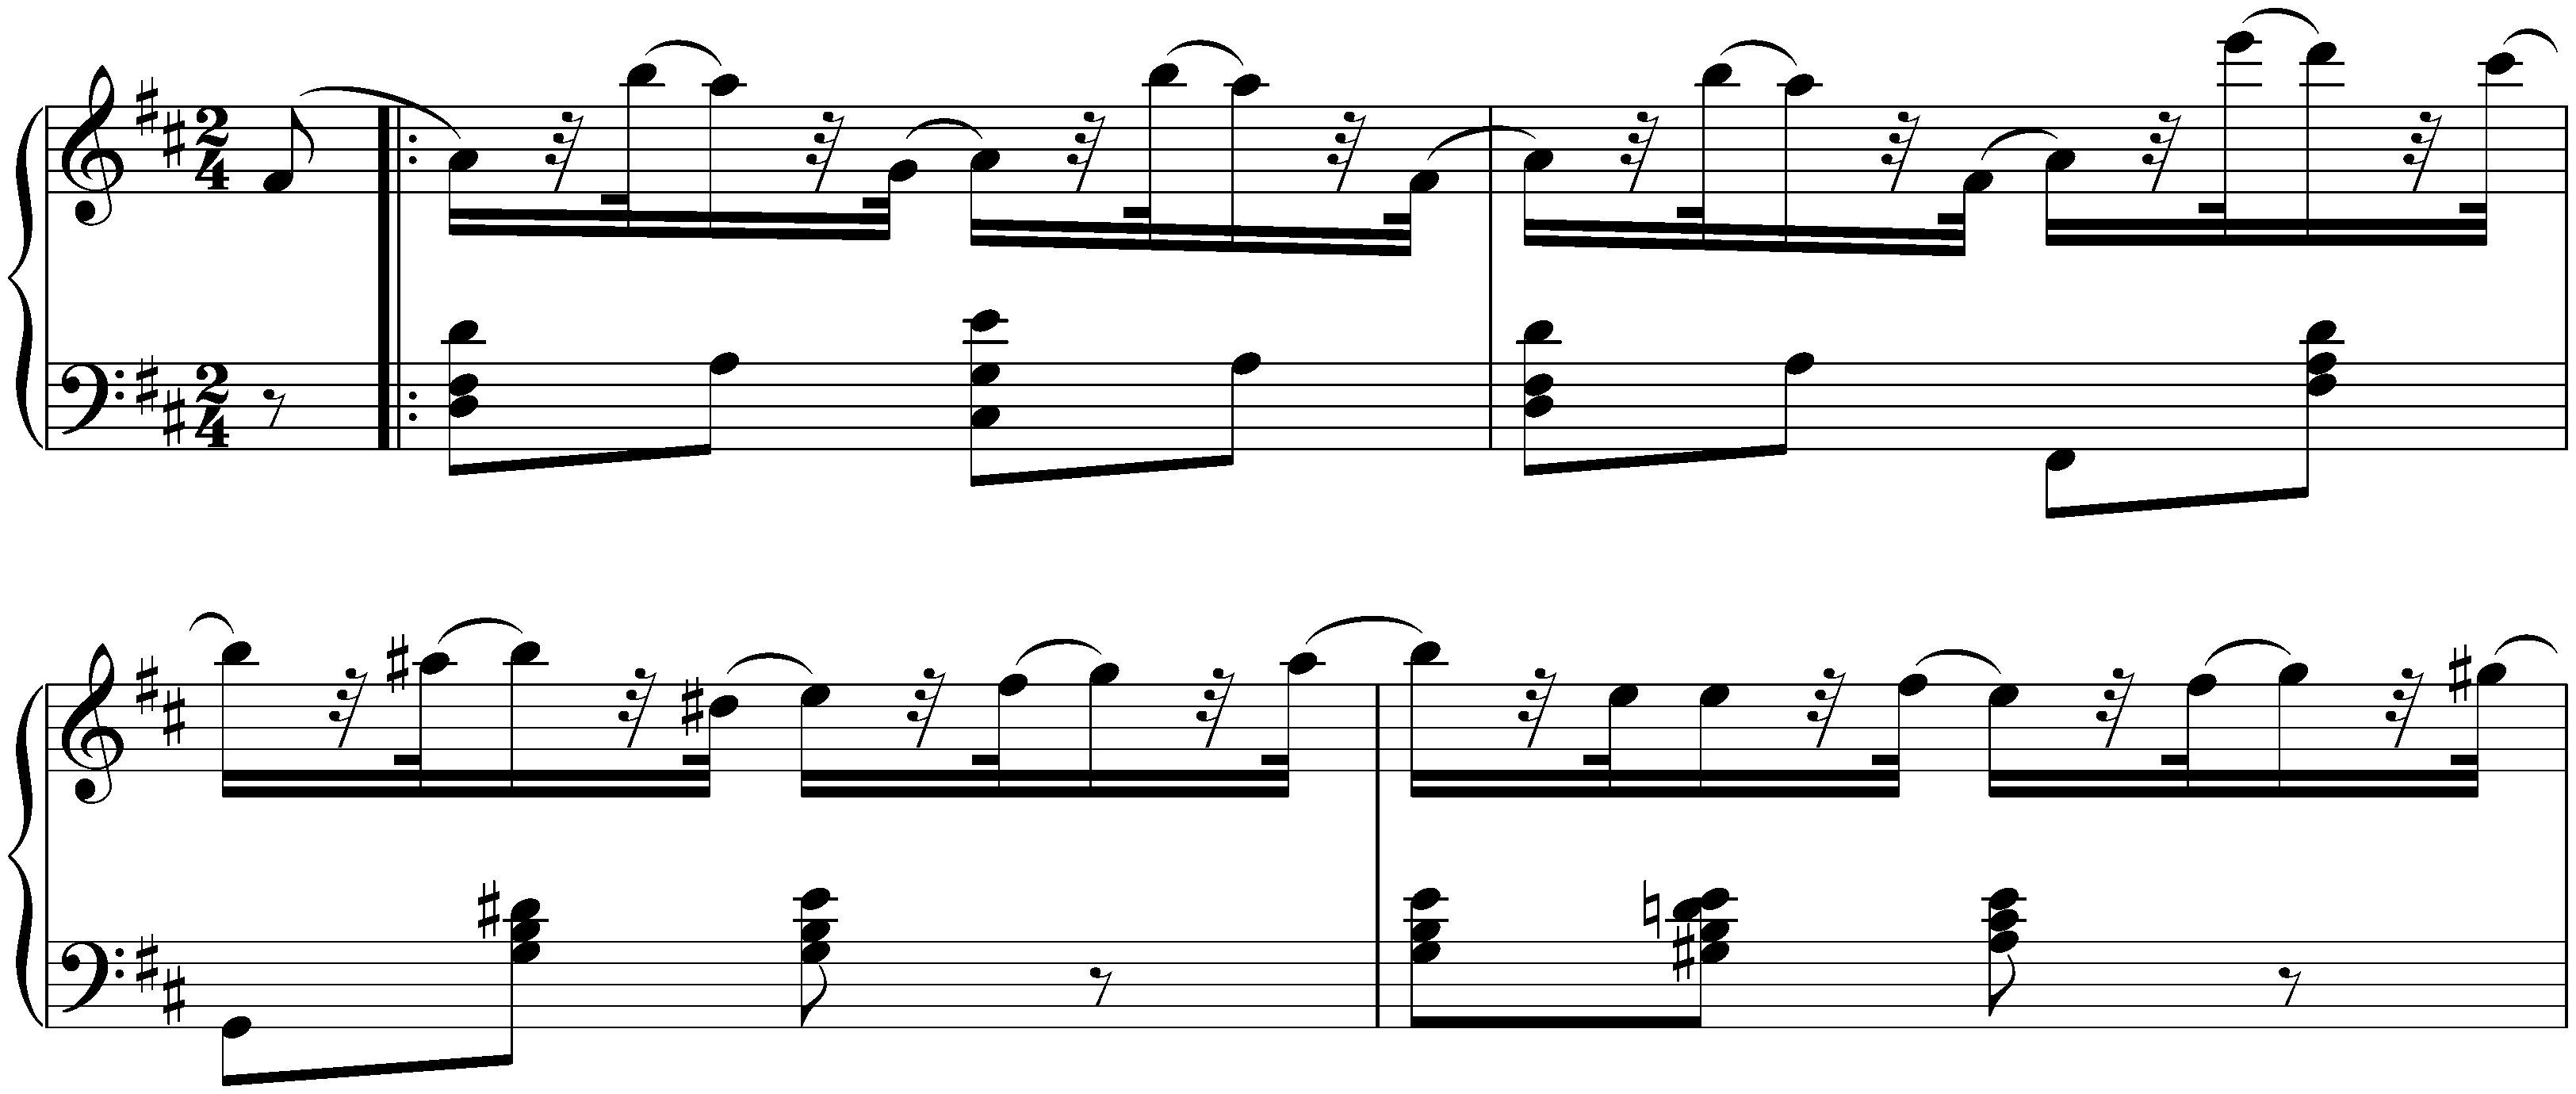 Three Écossaises, op. 72 no. 3; 1. D major